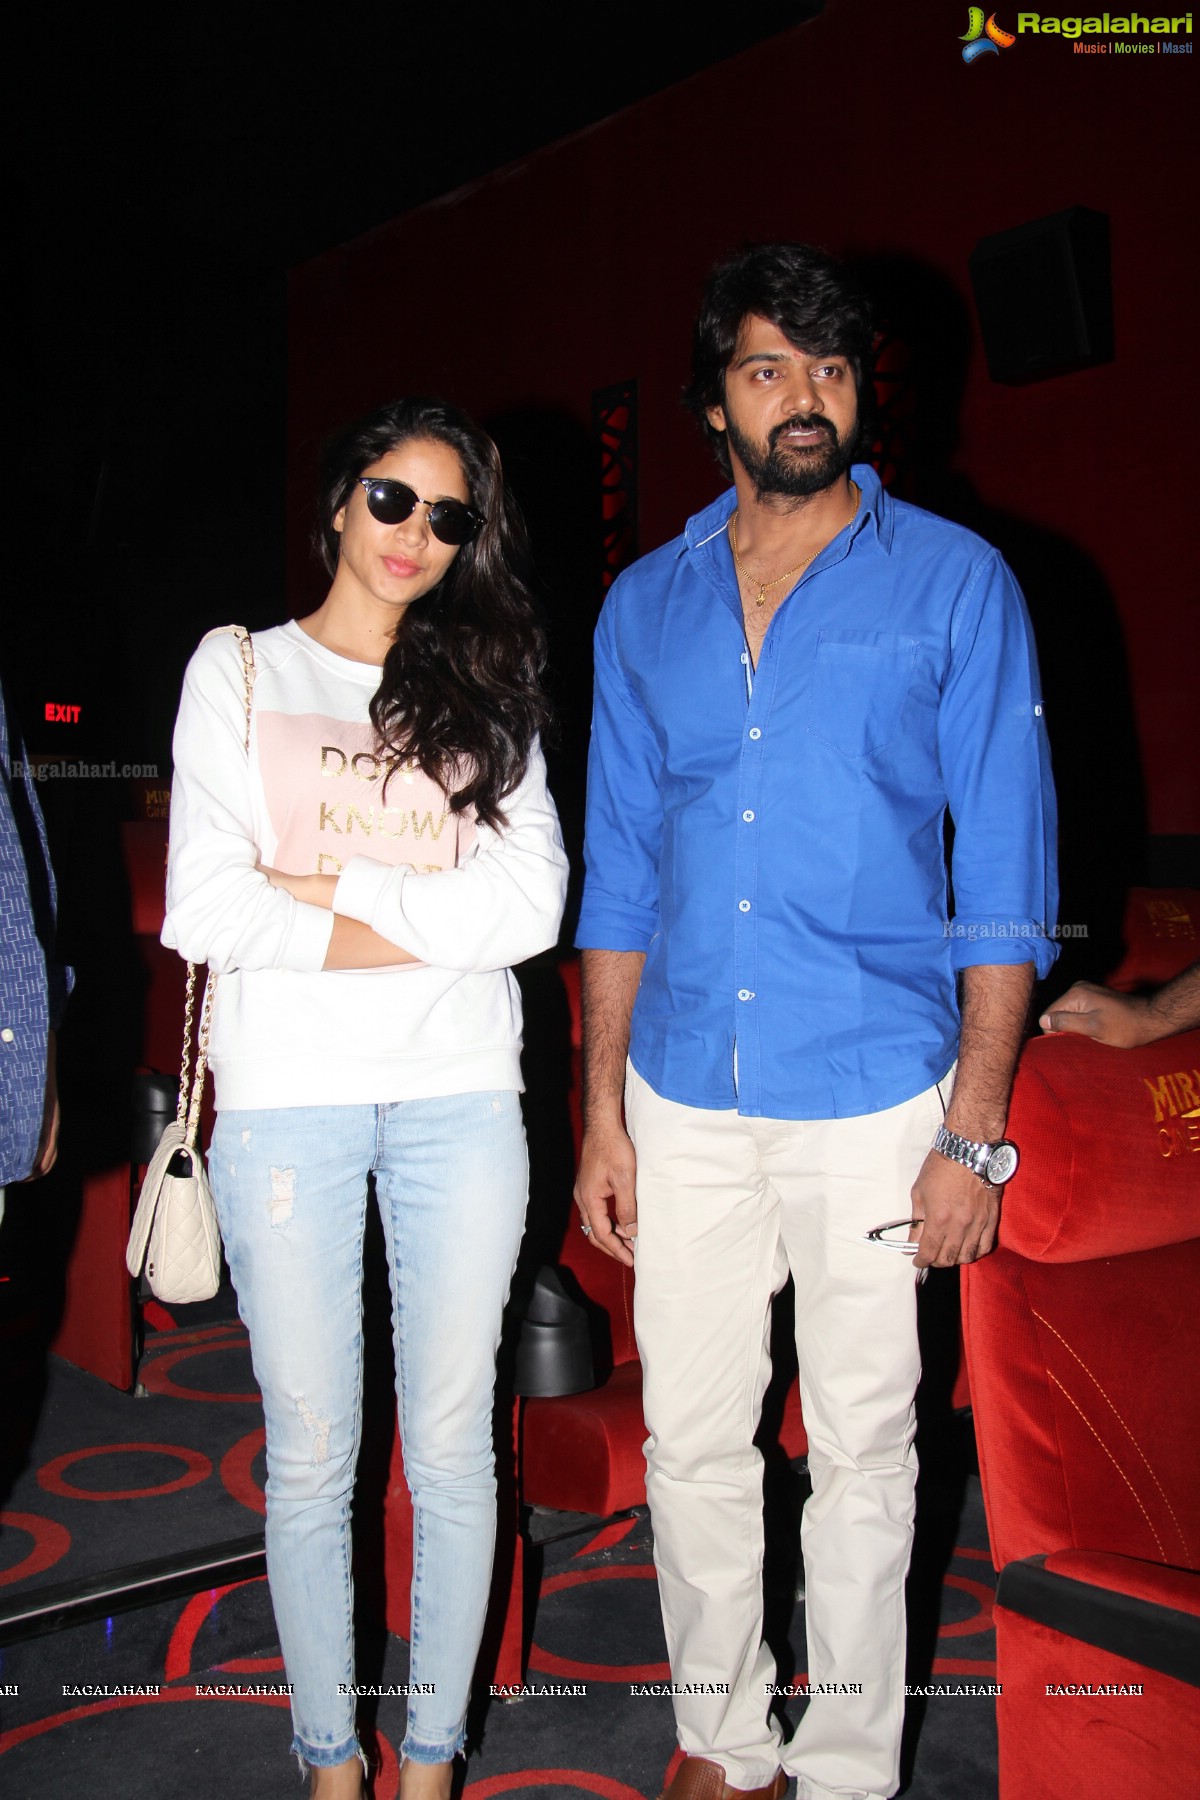 Lacchimdeviki O Lekkundi Team launches Miraj Cinemas in Hyderabad